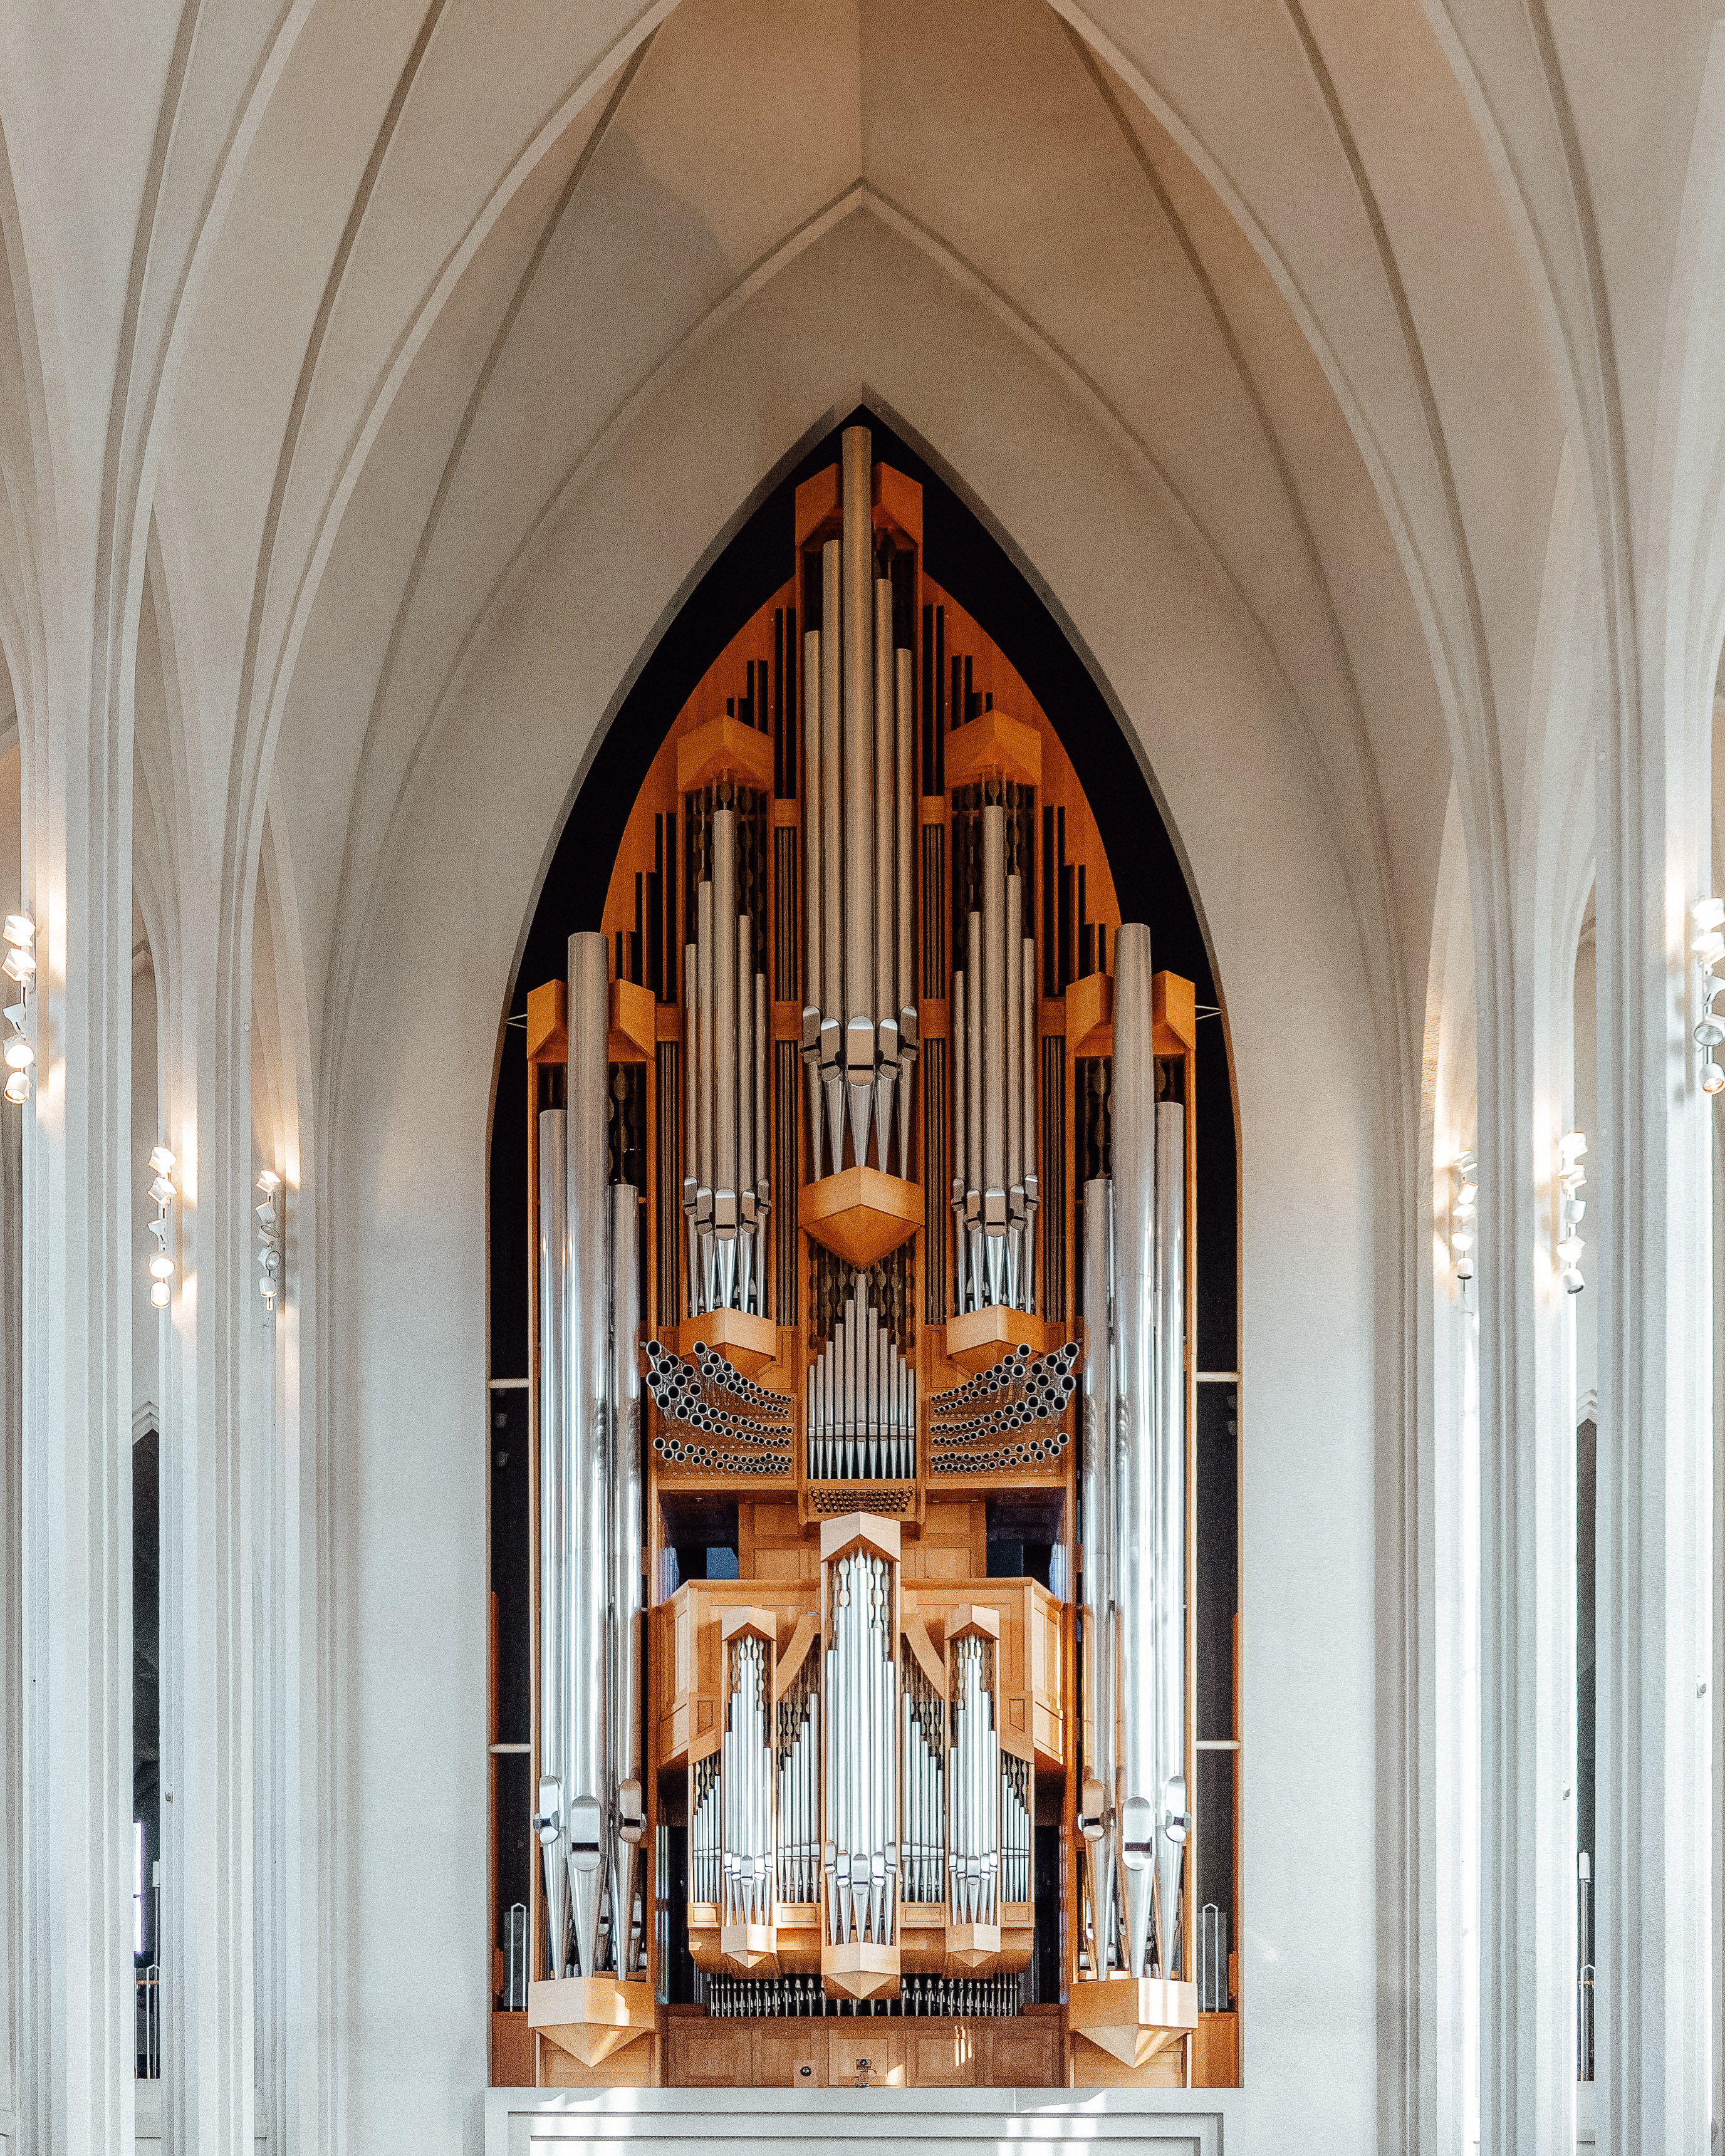 Ornate organ in the Hallgrímskirkja